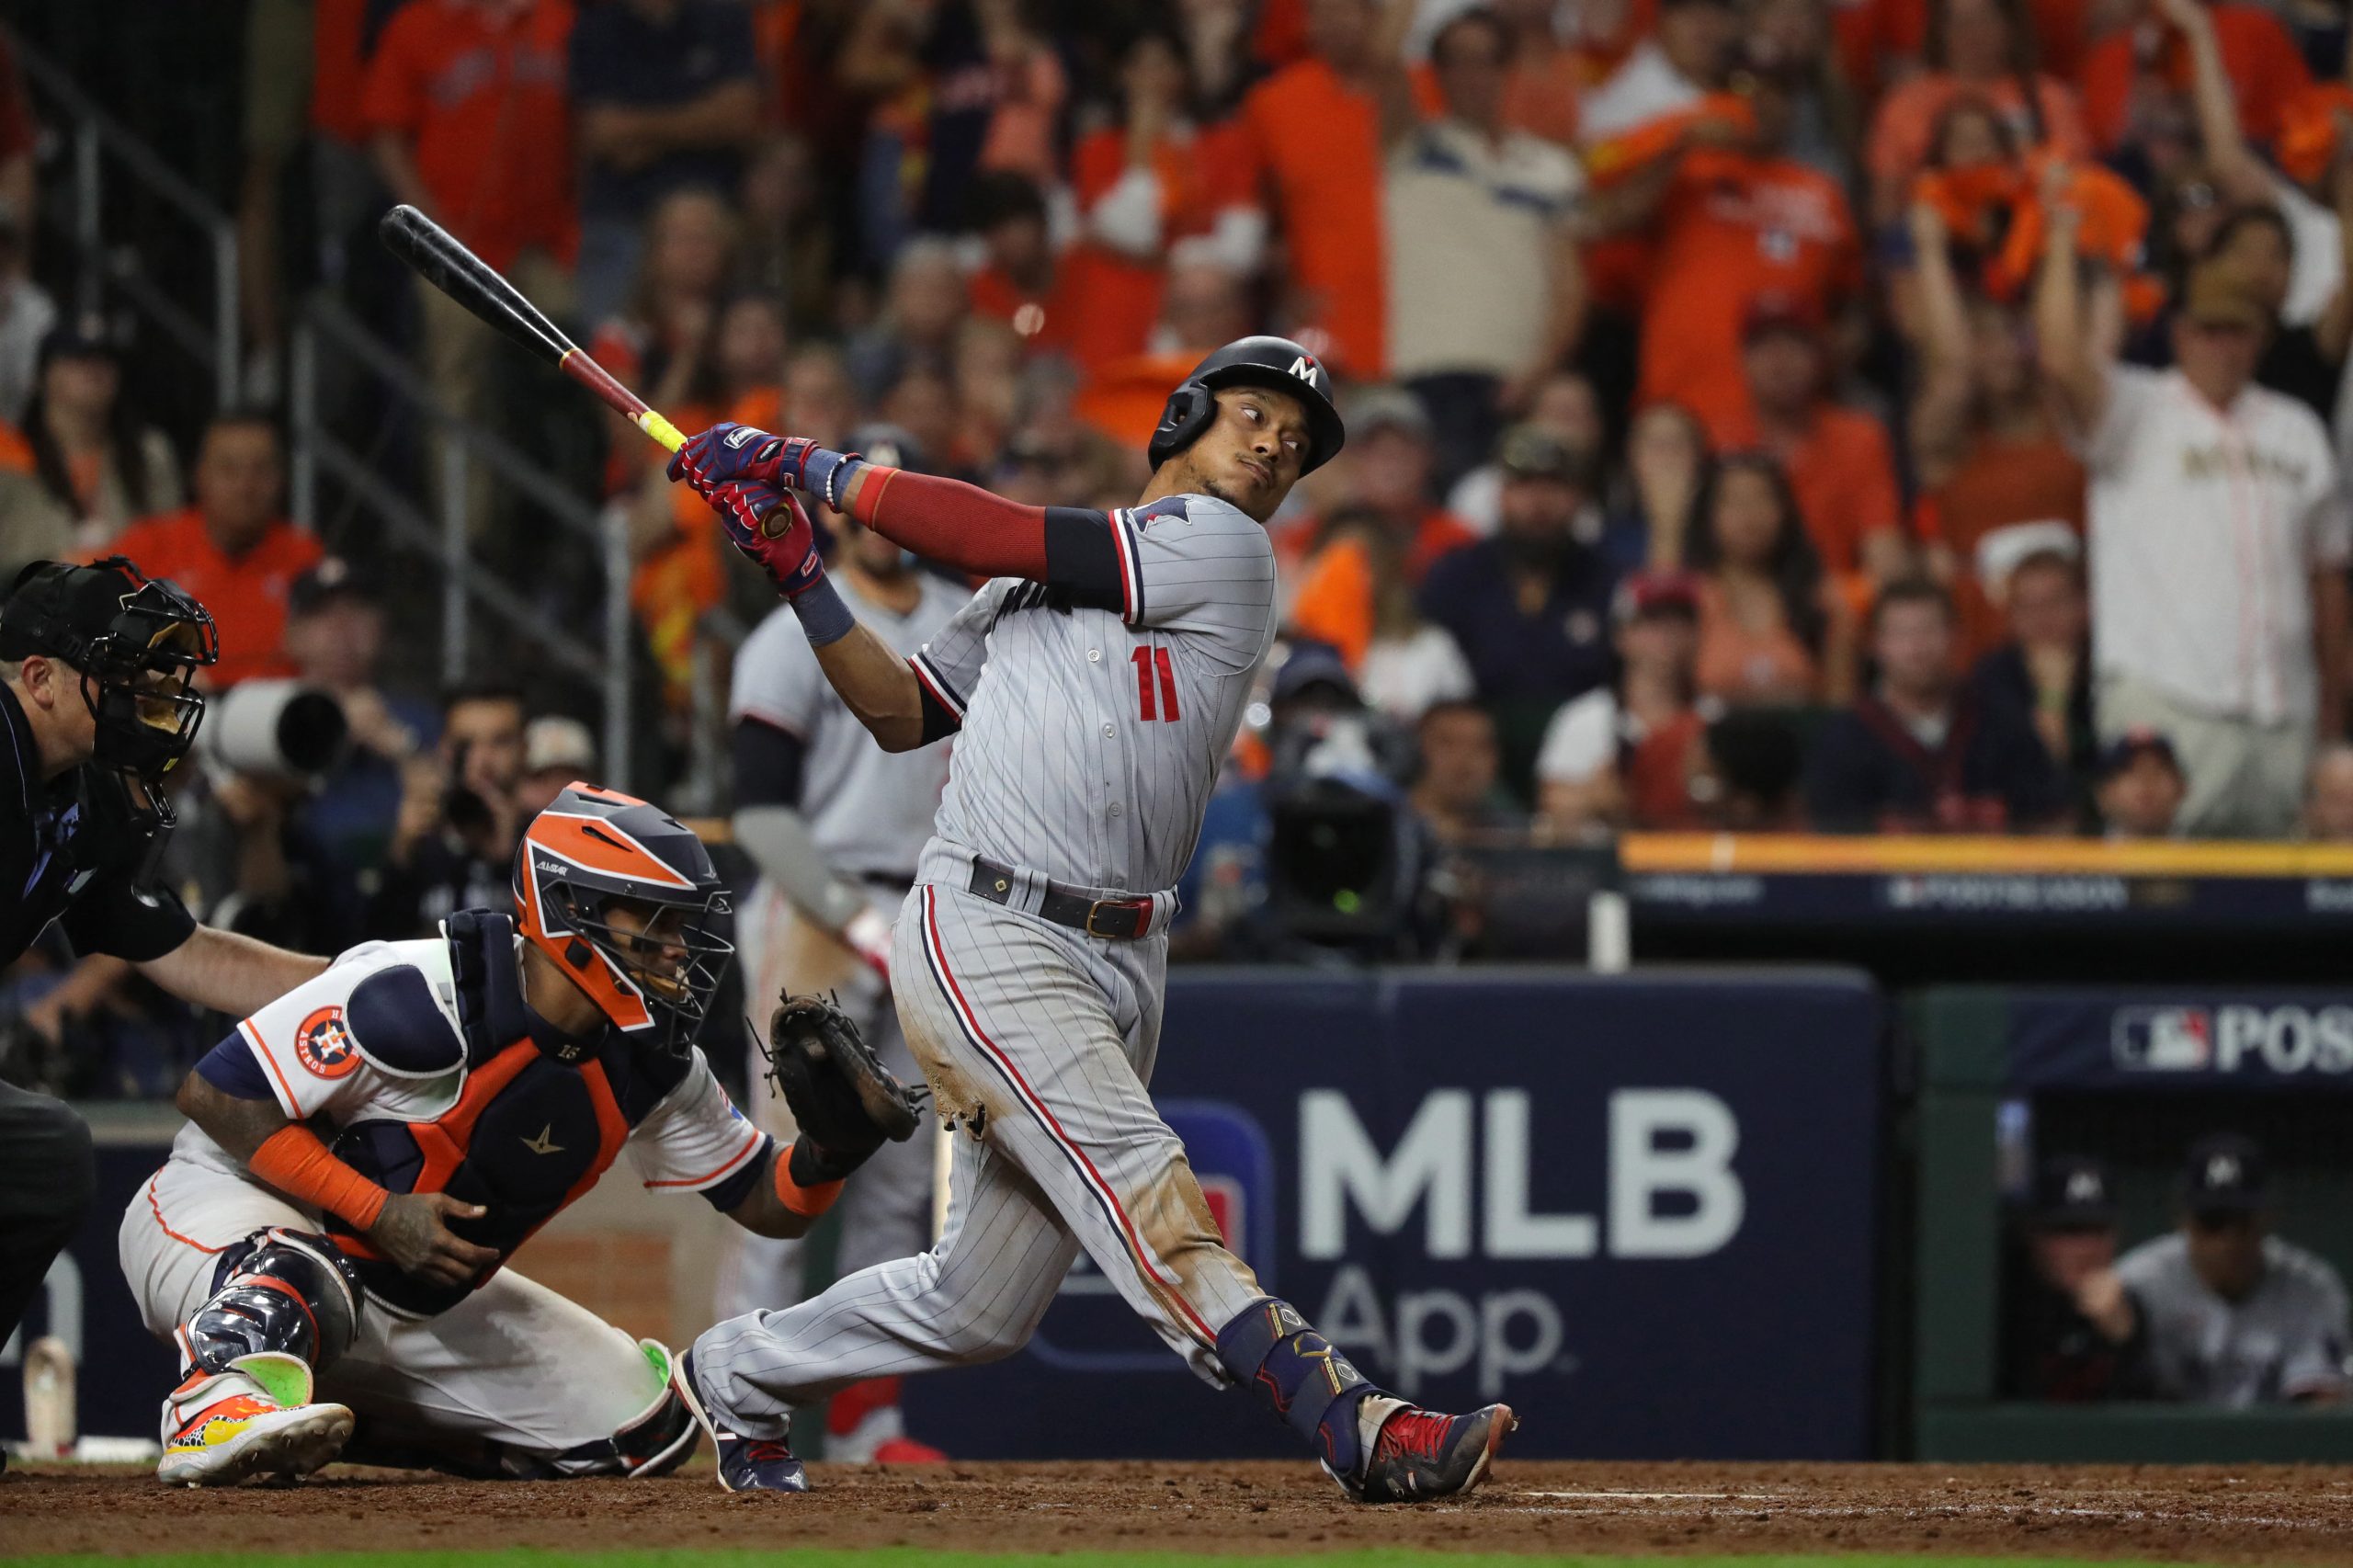 Yordan Alvarez ends Phillies dream run, Astros win World Series